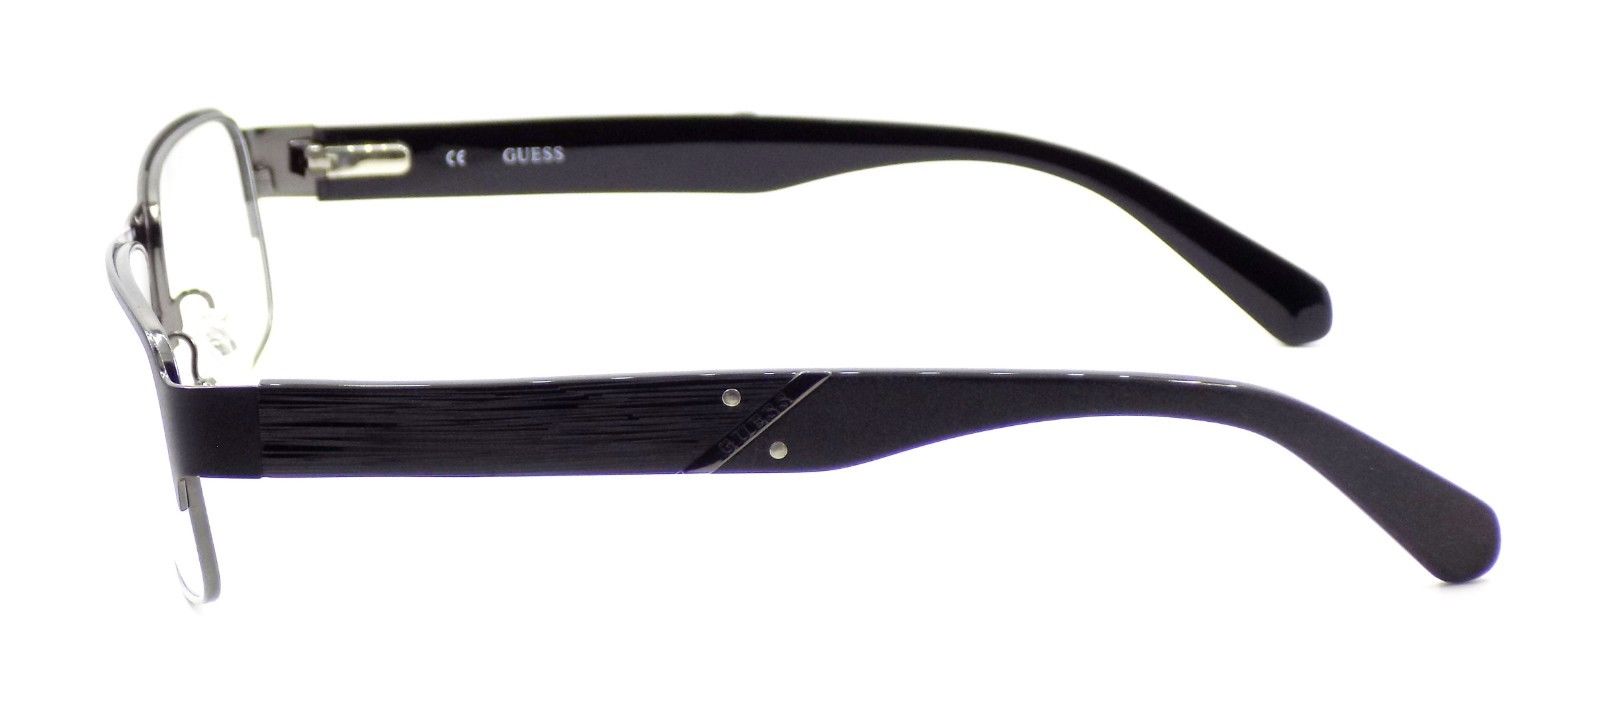 3-GUESS GU1836 BLK Unisex Eyeglasses Frames Metal 54-18-135 Satin Black + CASE-715583292932-IKSpecs